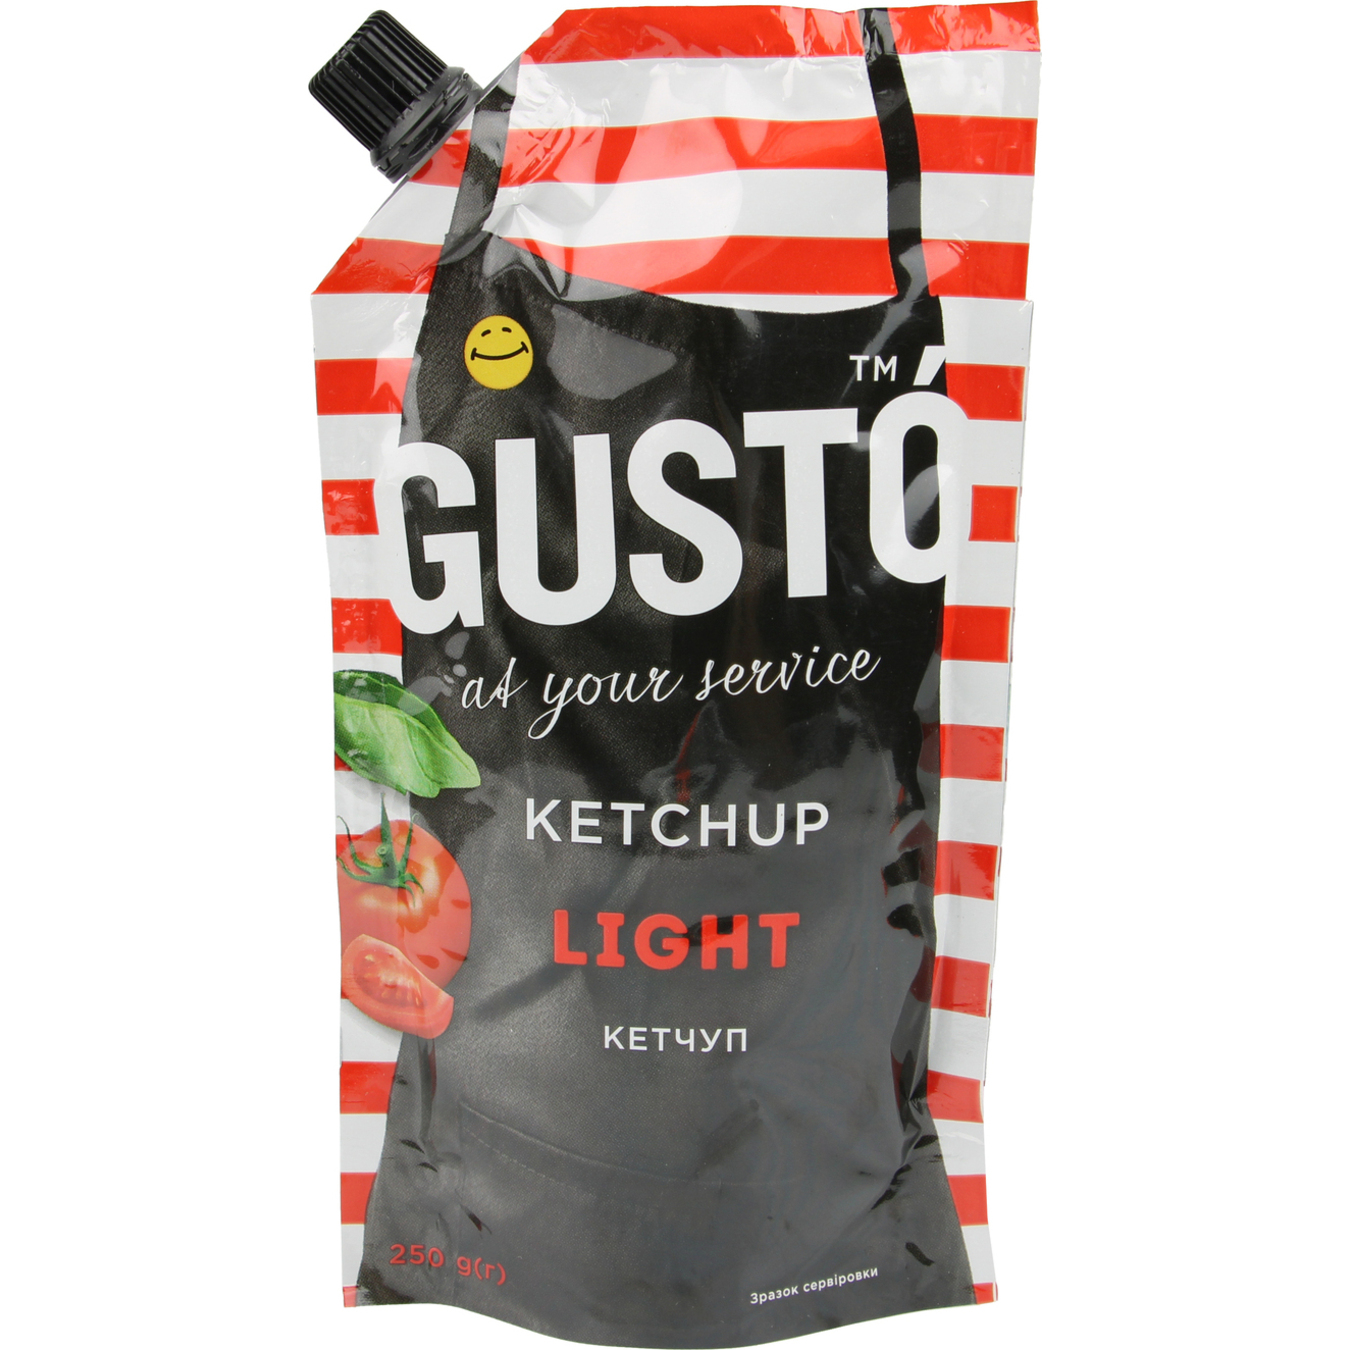 Gusto Light Ketchup 250g